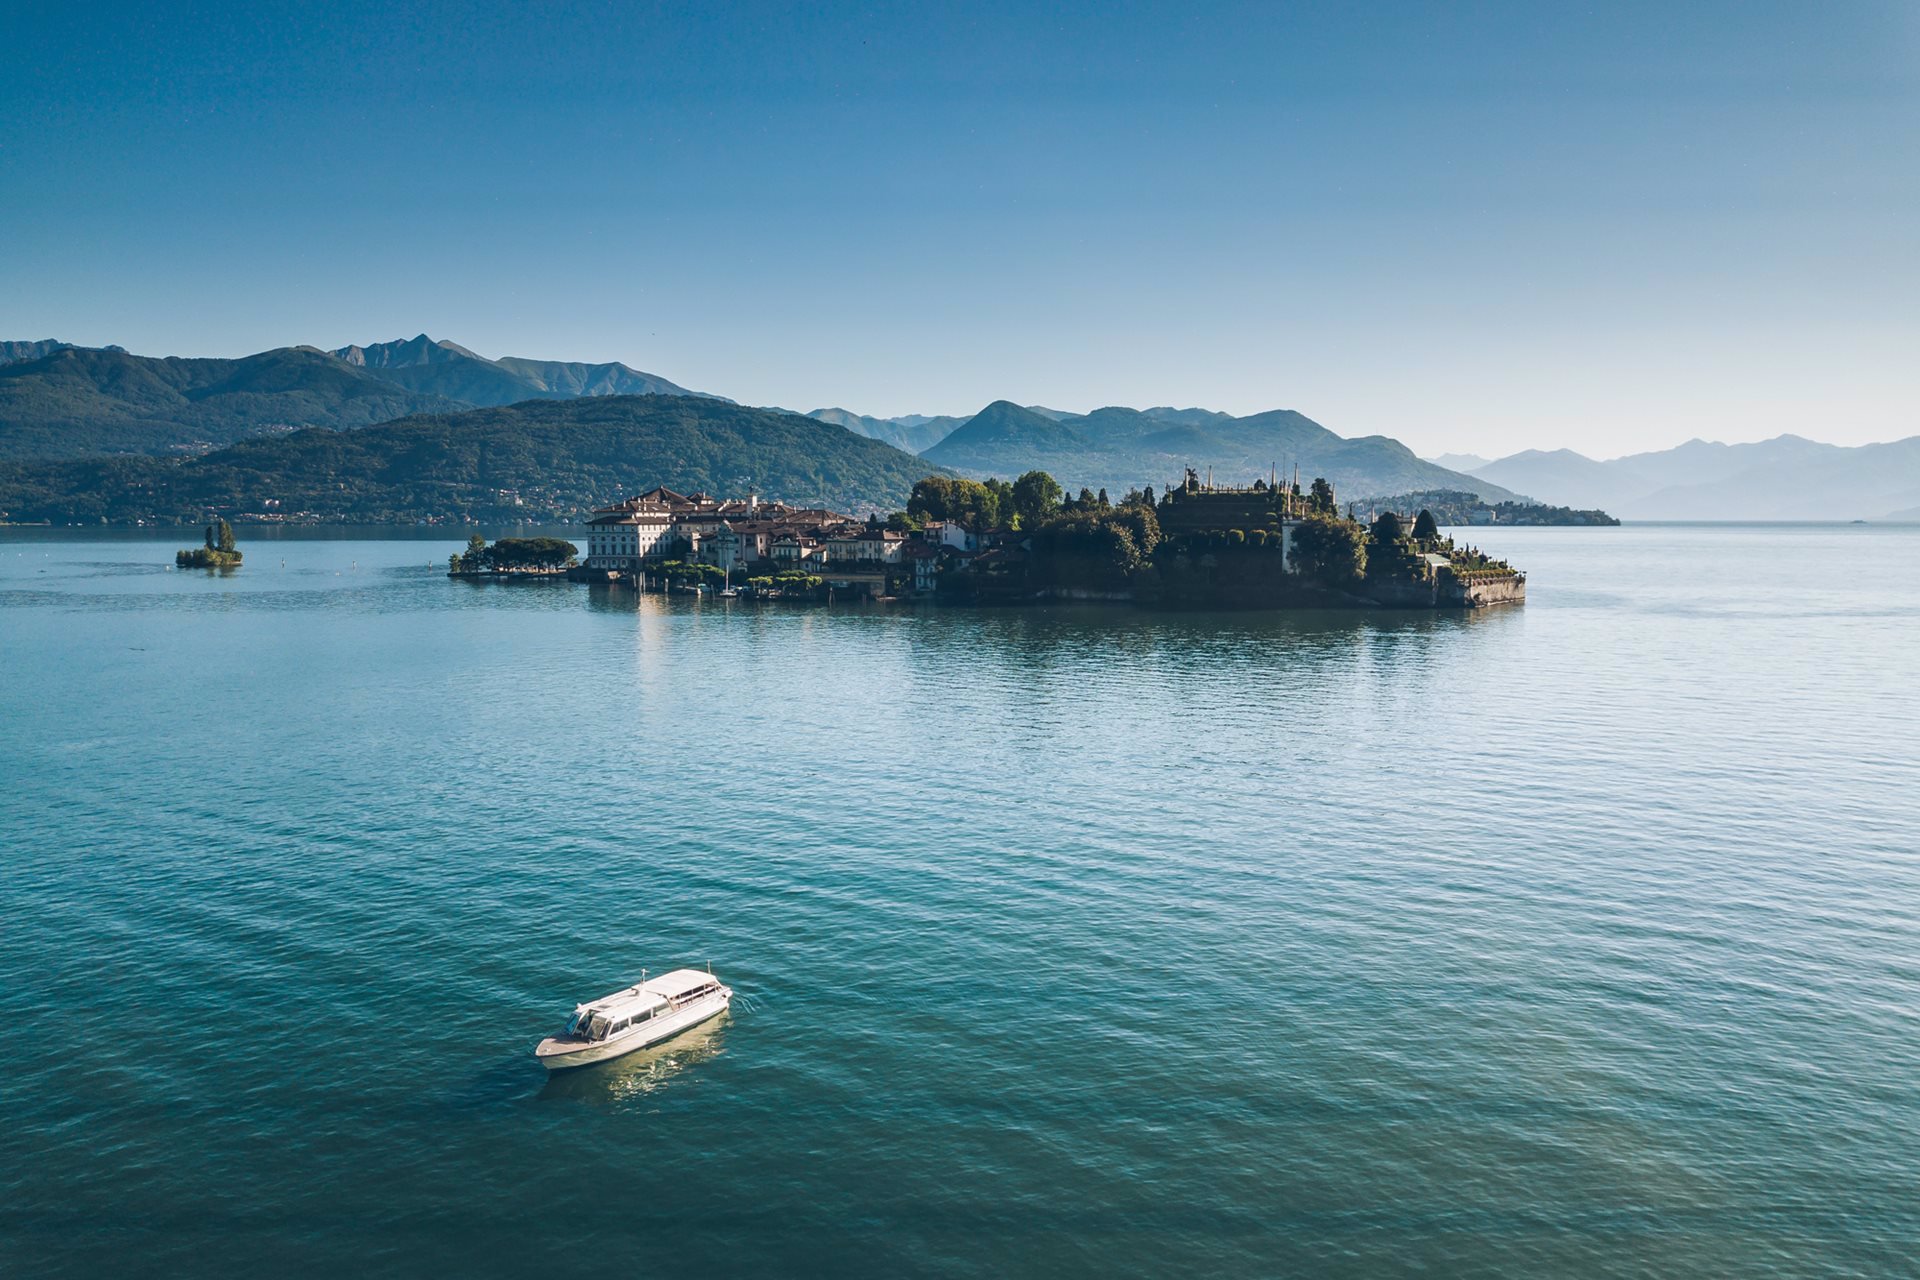 islas borromeas en stresa italia. lago maggiore. foto lexus